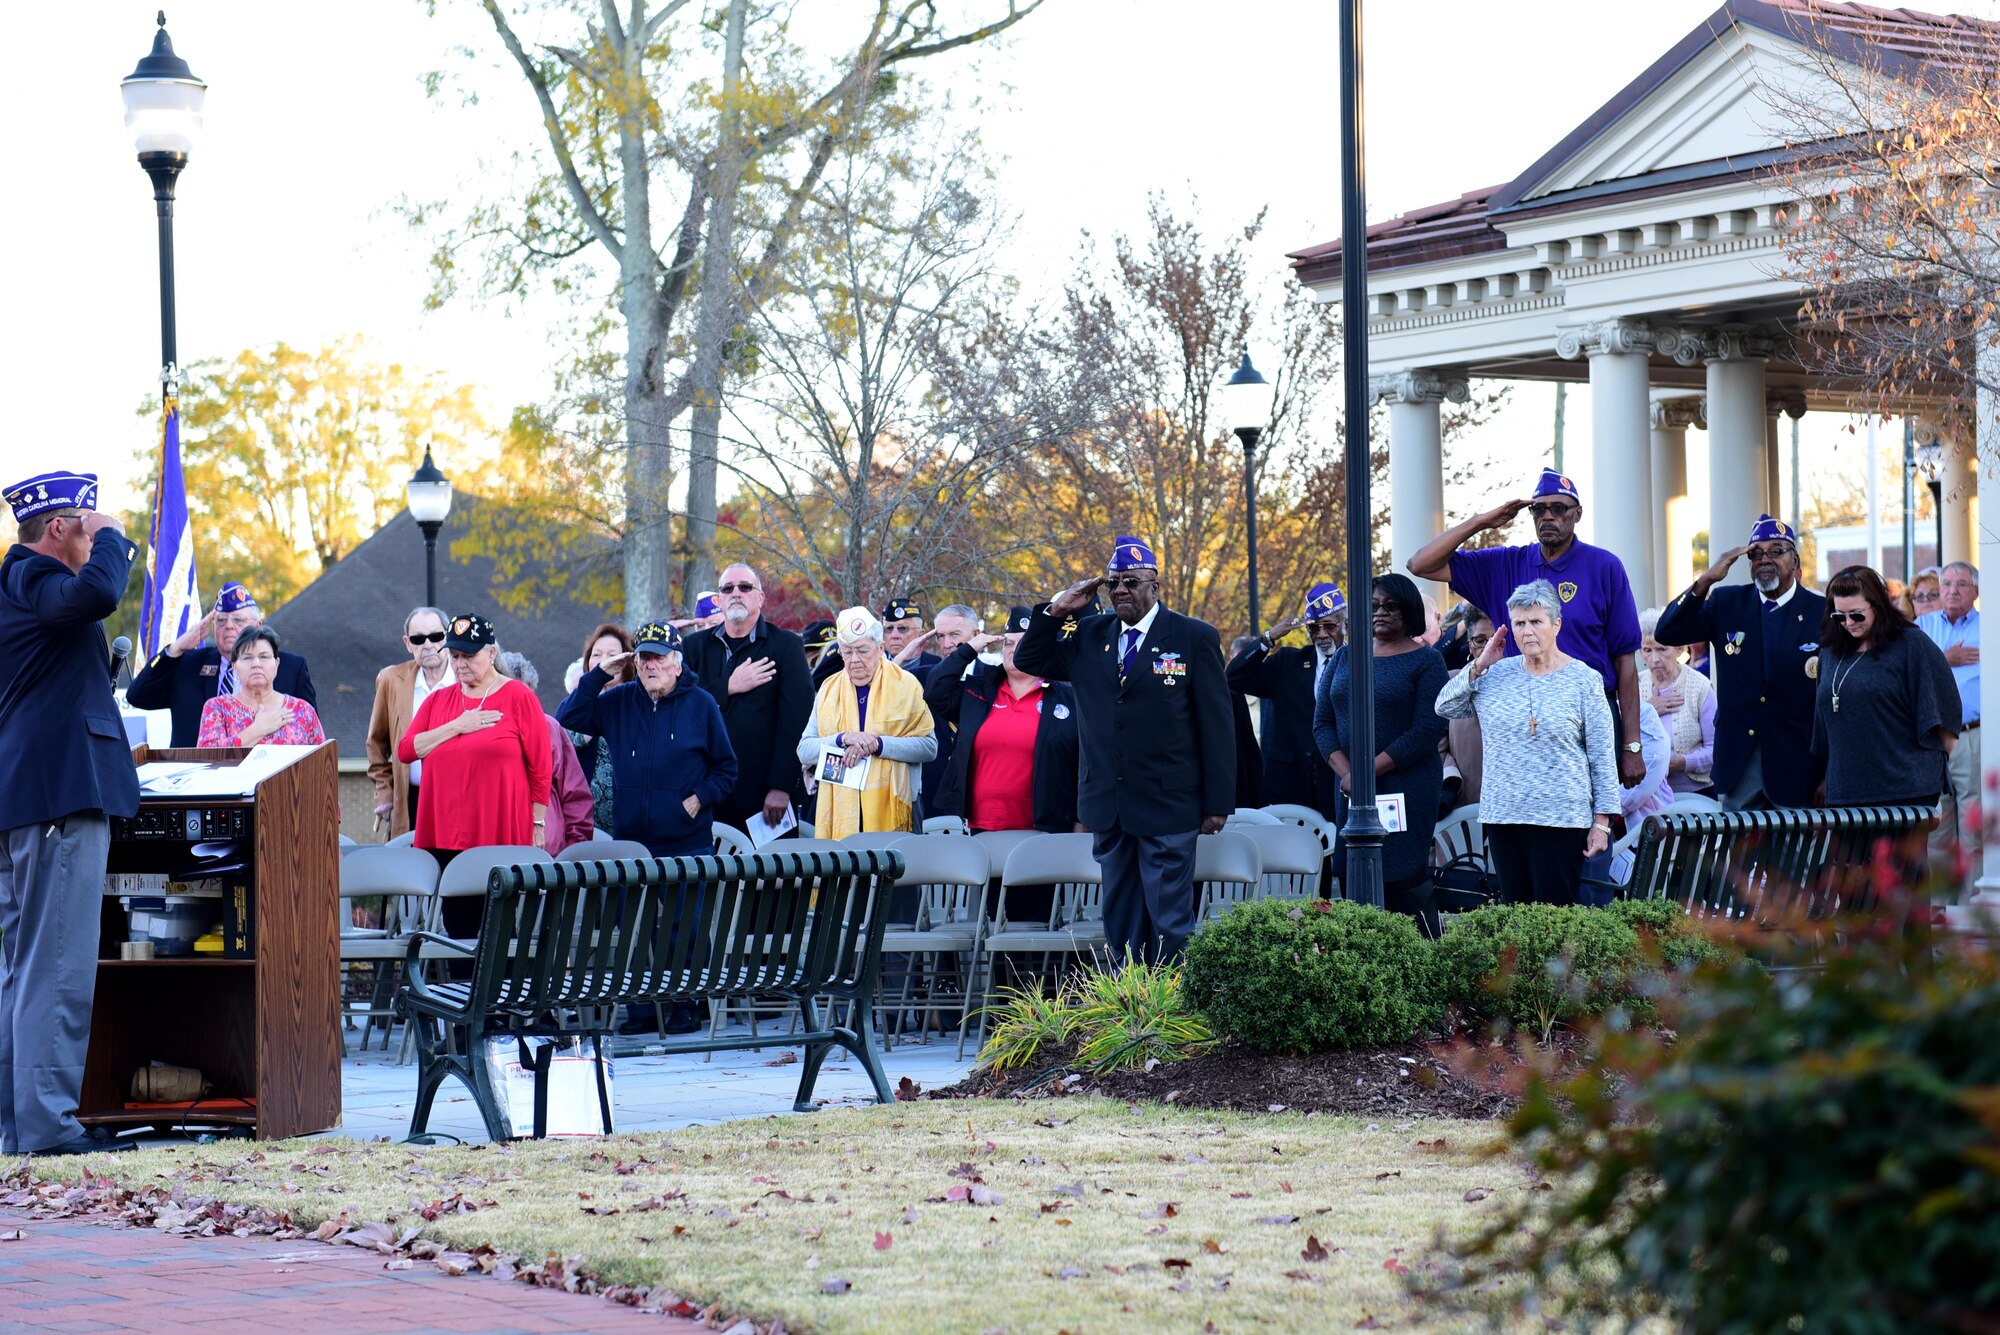 Recipients of the Purple Heart medal and members of the community gather for a Purple Heart memorial dedication ceremony Nov. 29, 2017, at the Wayne County Veteran’s Memorial, Goldsboro, North Carolina.